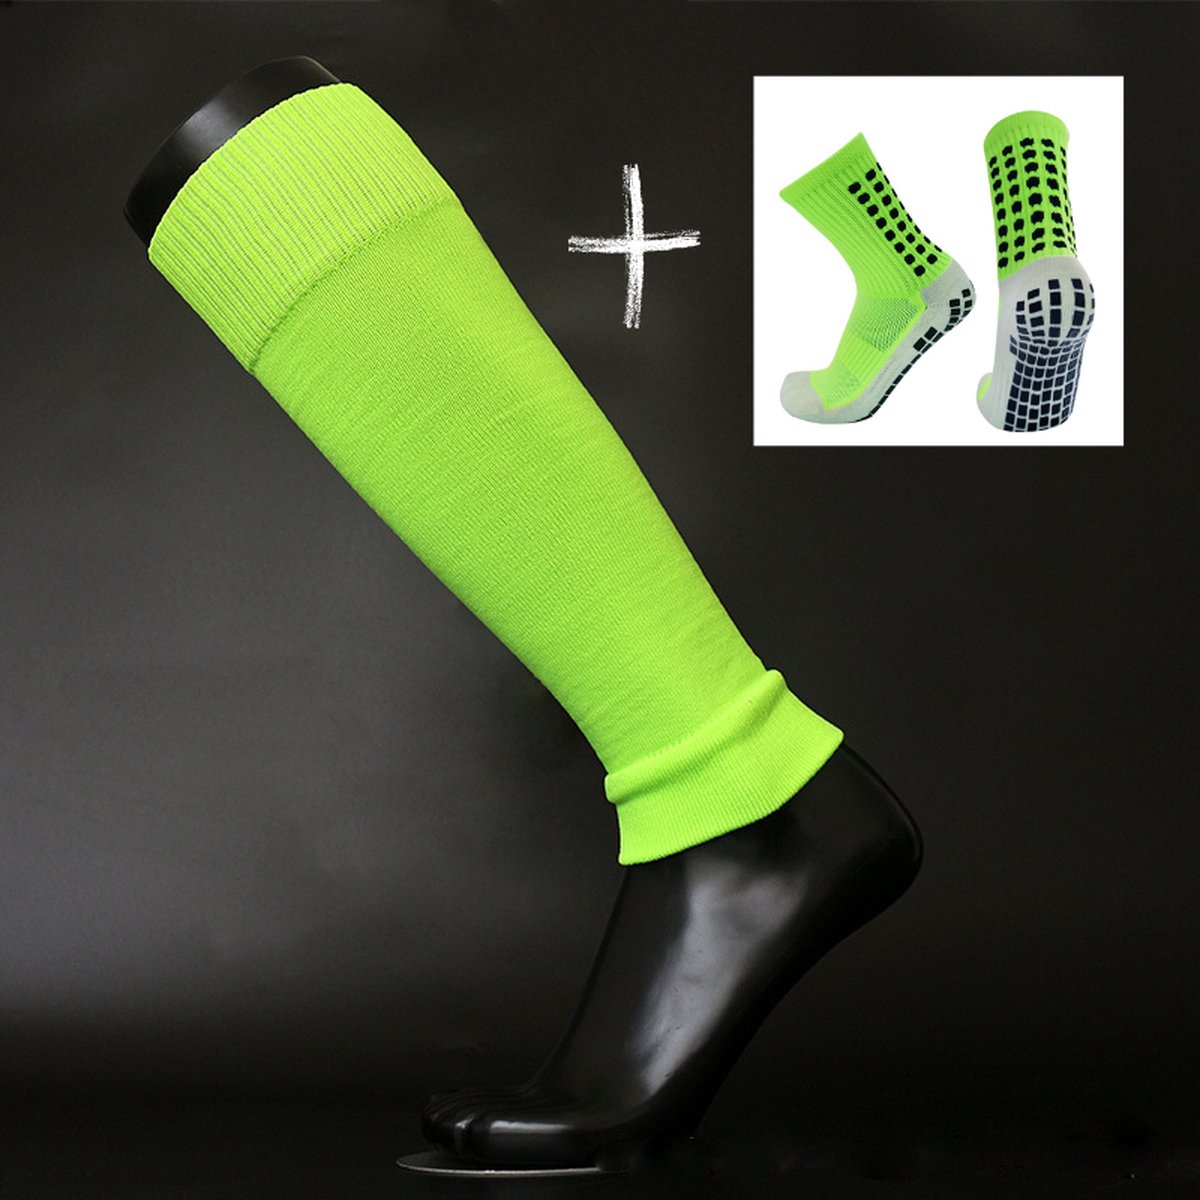 Knaak Voetloze sokken + Gripsokken set - Footless - Antislip - Neon